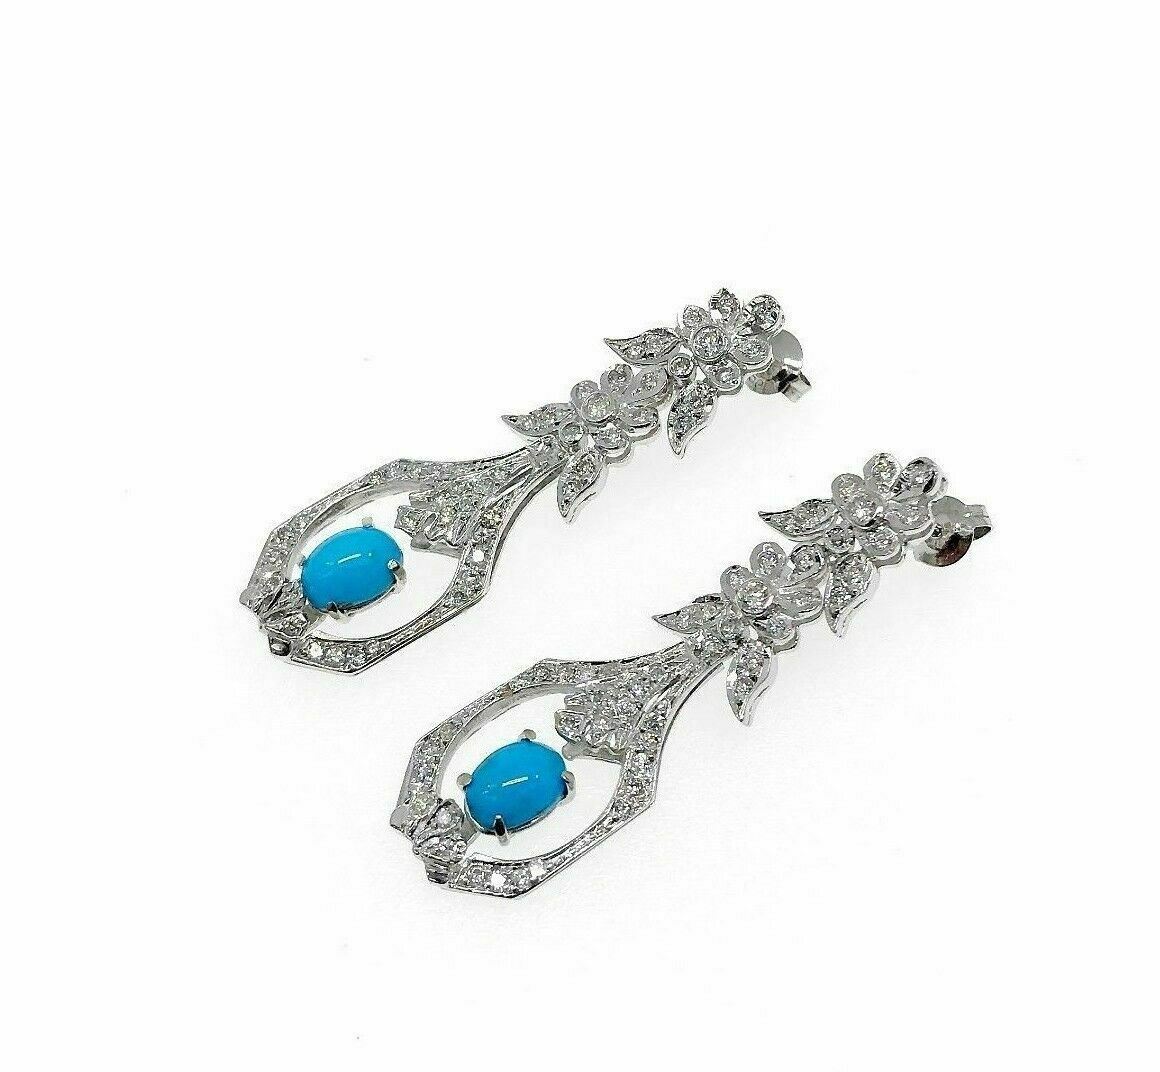 Turquoise and Diamond Dangle Drop Earrings in 14K White Gold 1.15 Carat Diamond